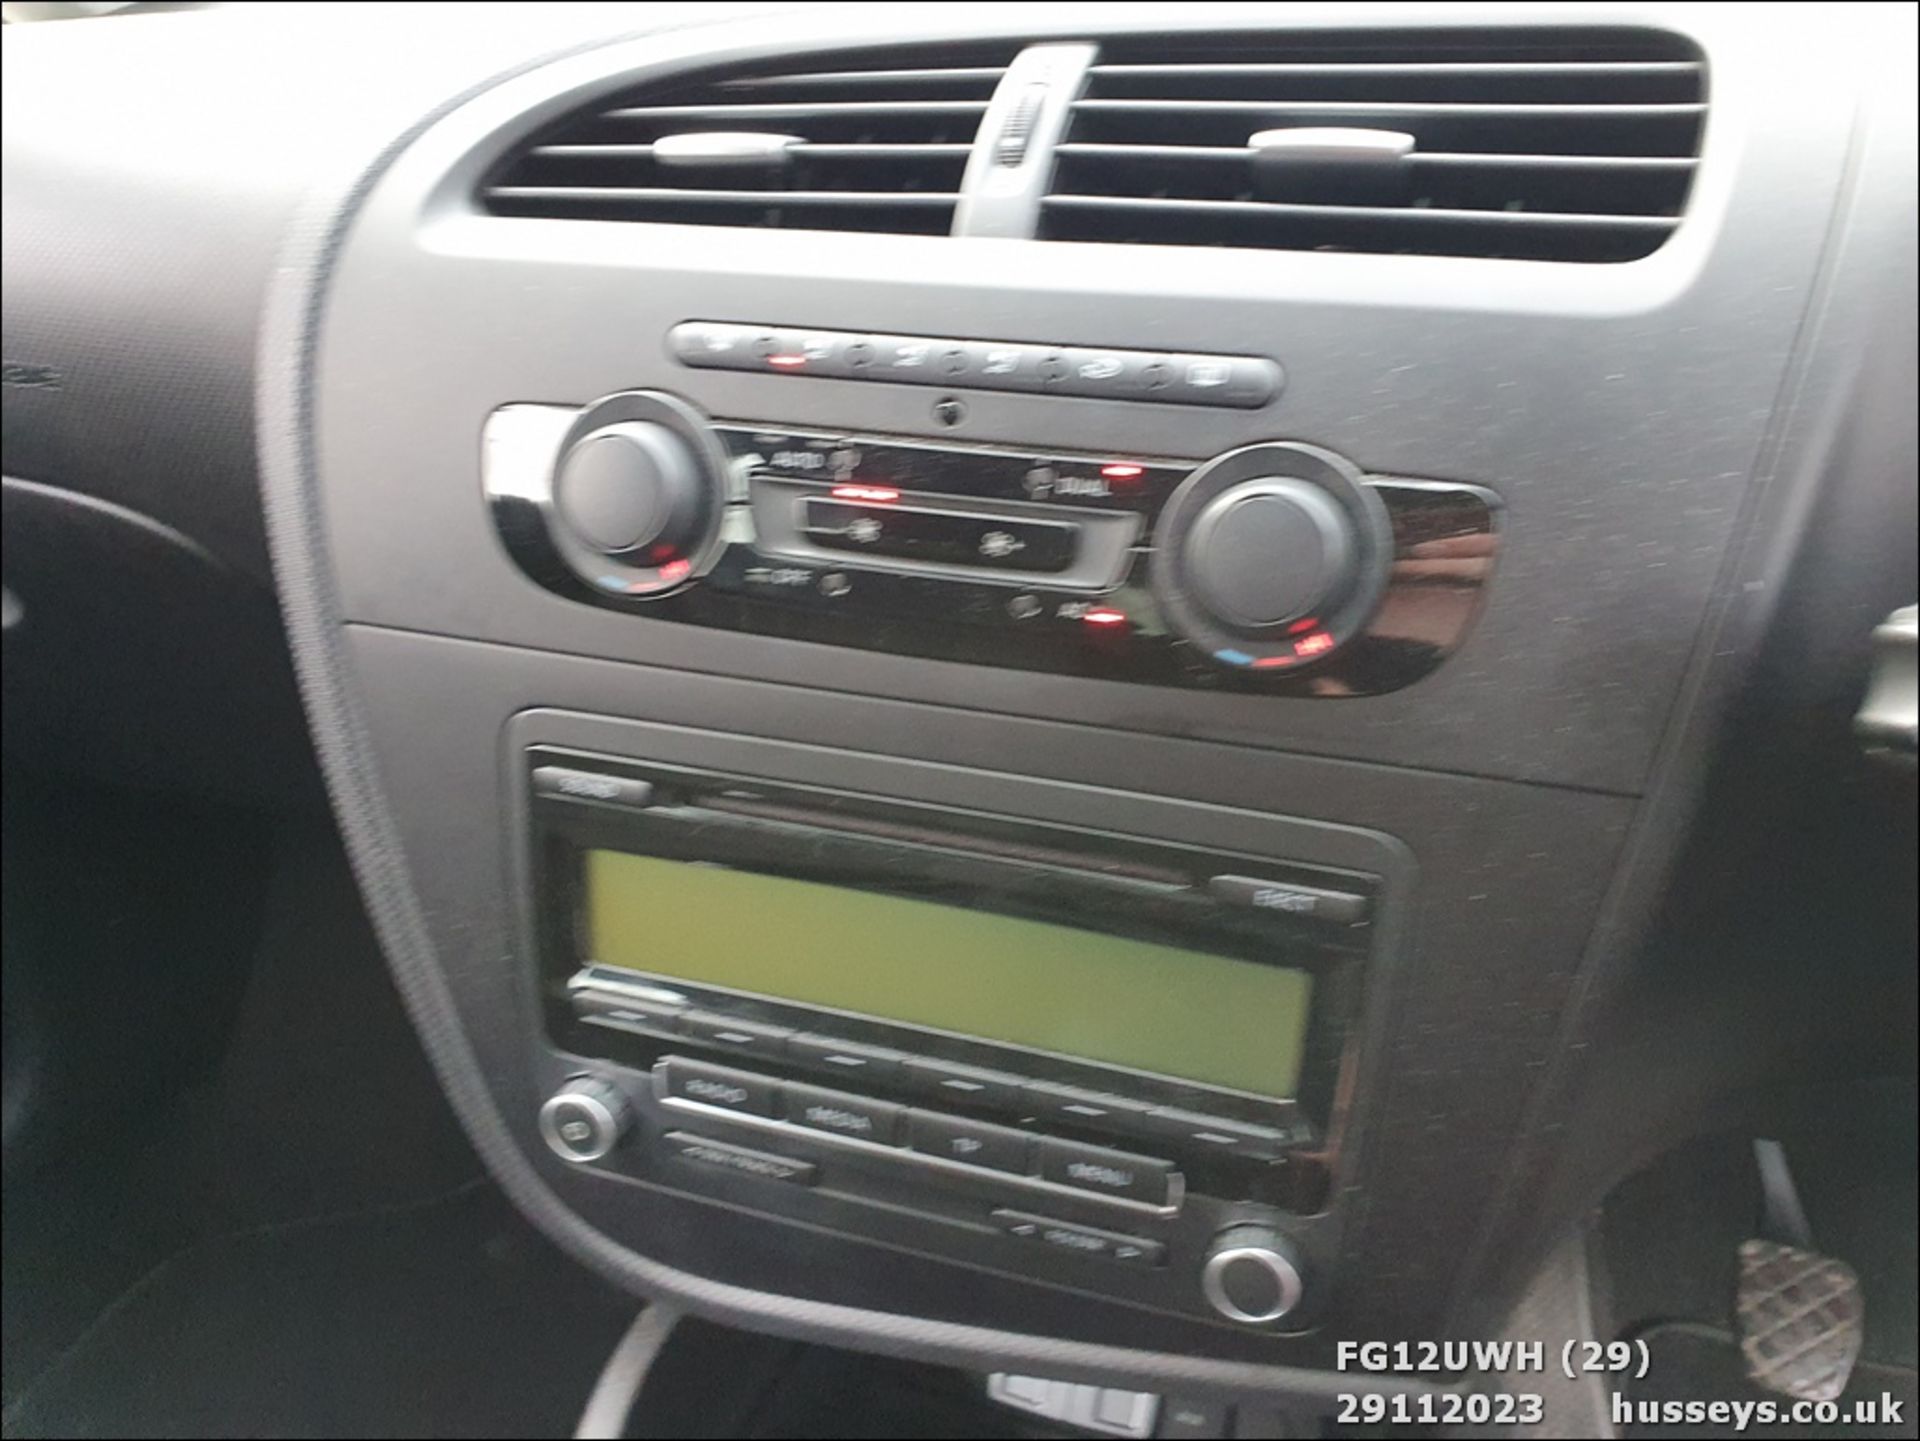 12/12 SEAT LEON S COPA CR TDI ECOMOT - 1598cc 5dr Hatchback (Black, 122k) - Image 30 of 58